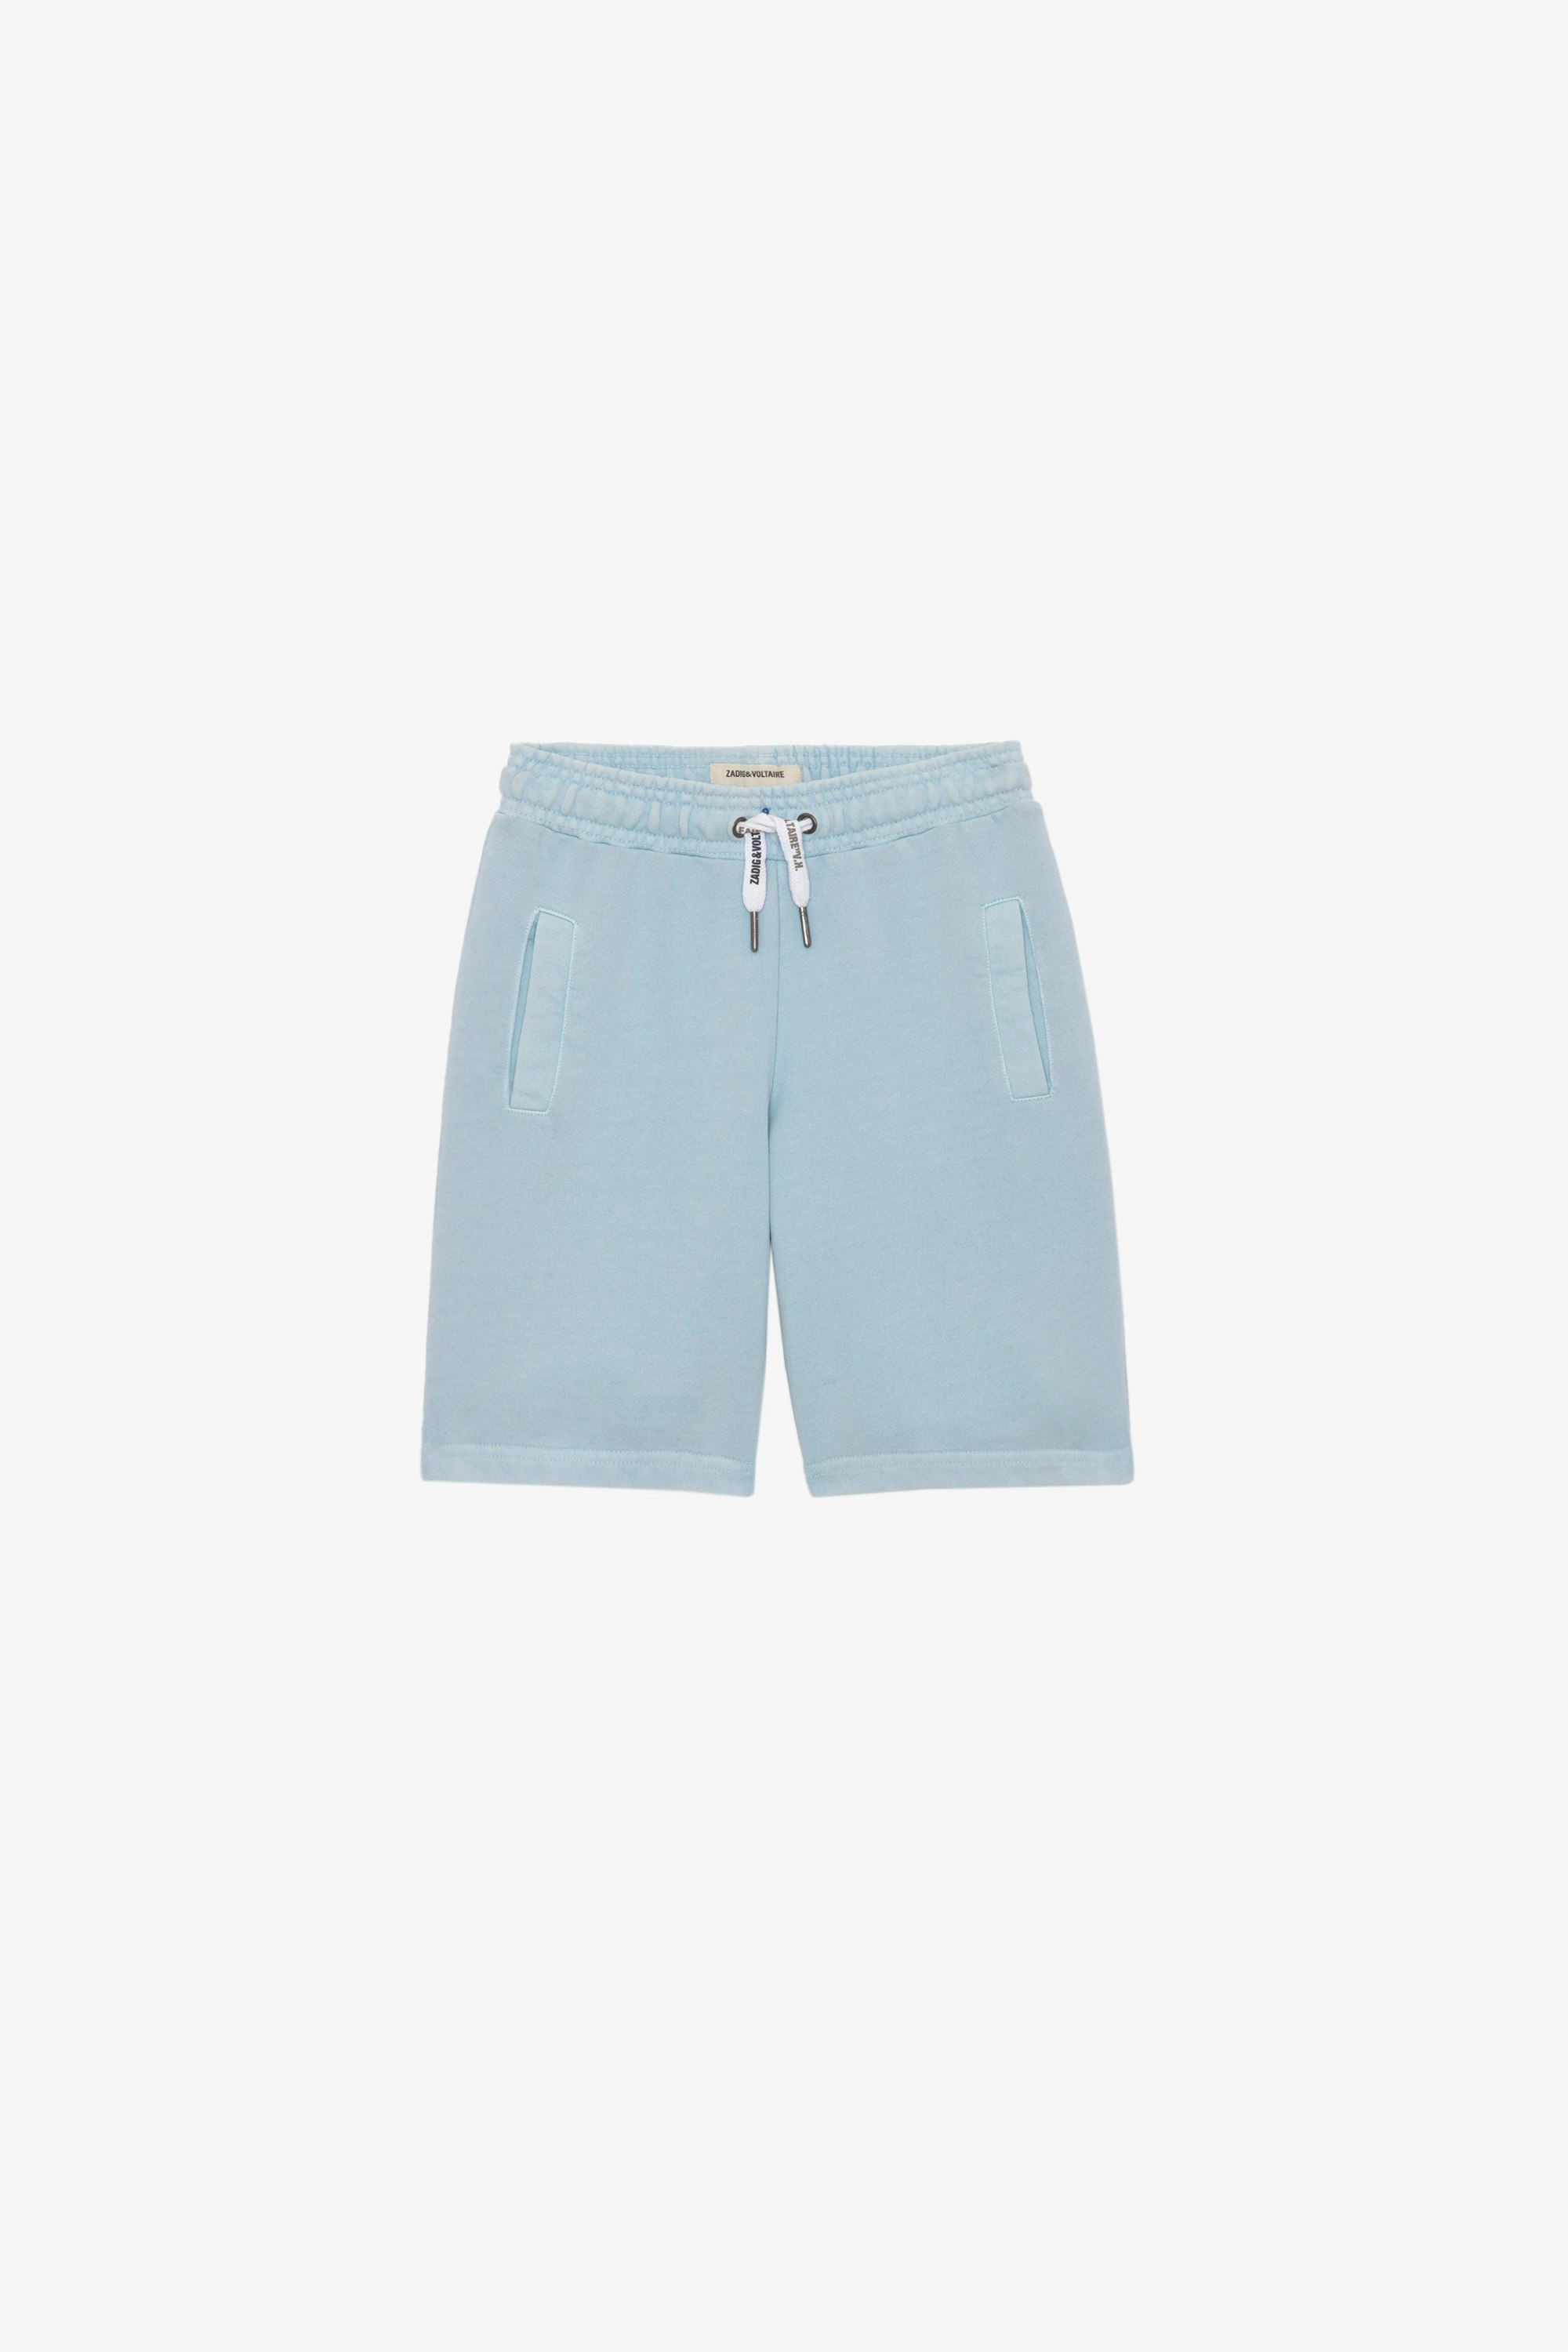 Kurt Boys’ Bermuda Shorts - Boys’ blue cotton Bermuda shorts.